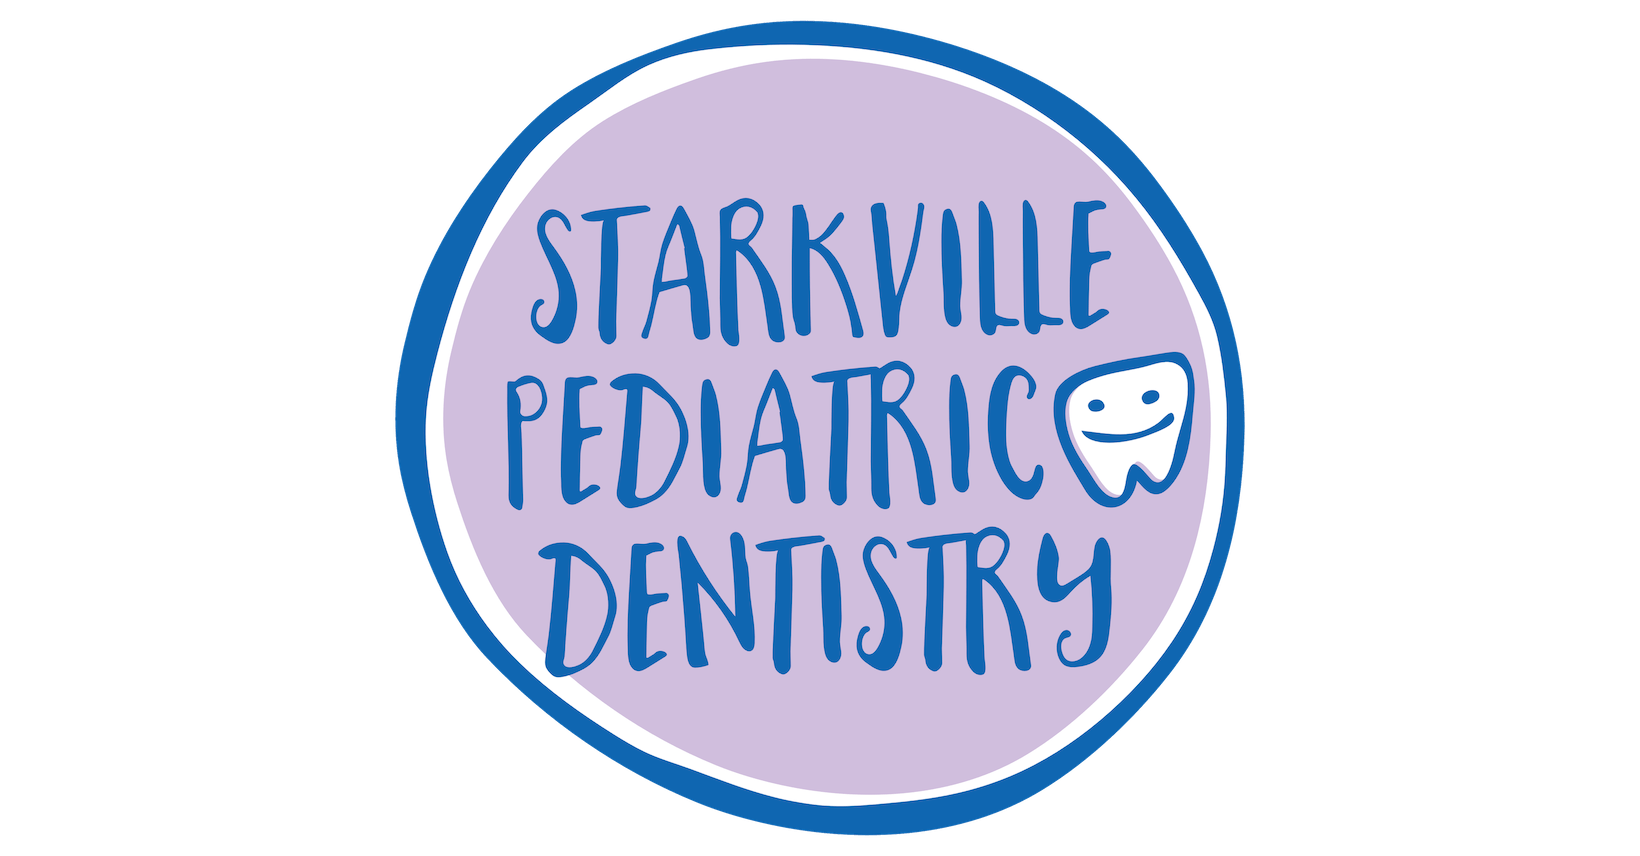 Starkville Pediatric Dentistry